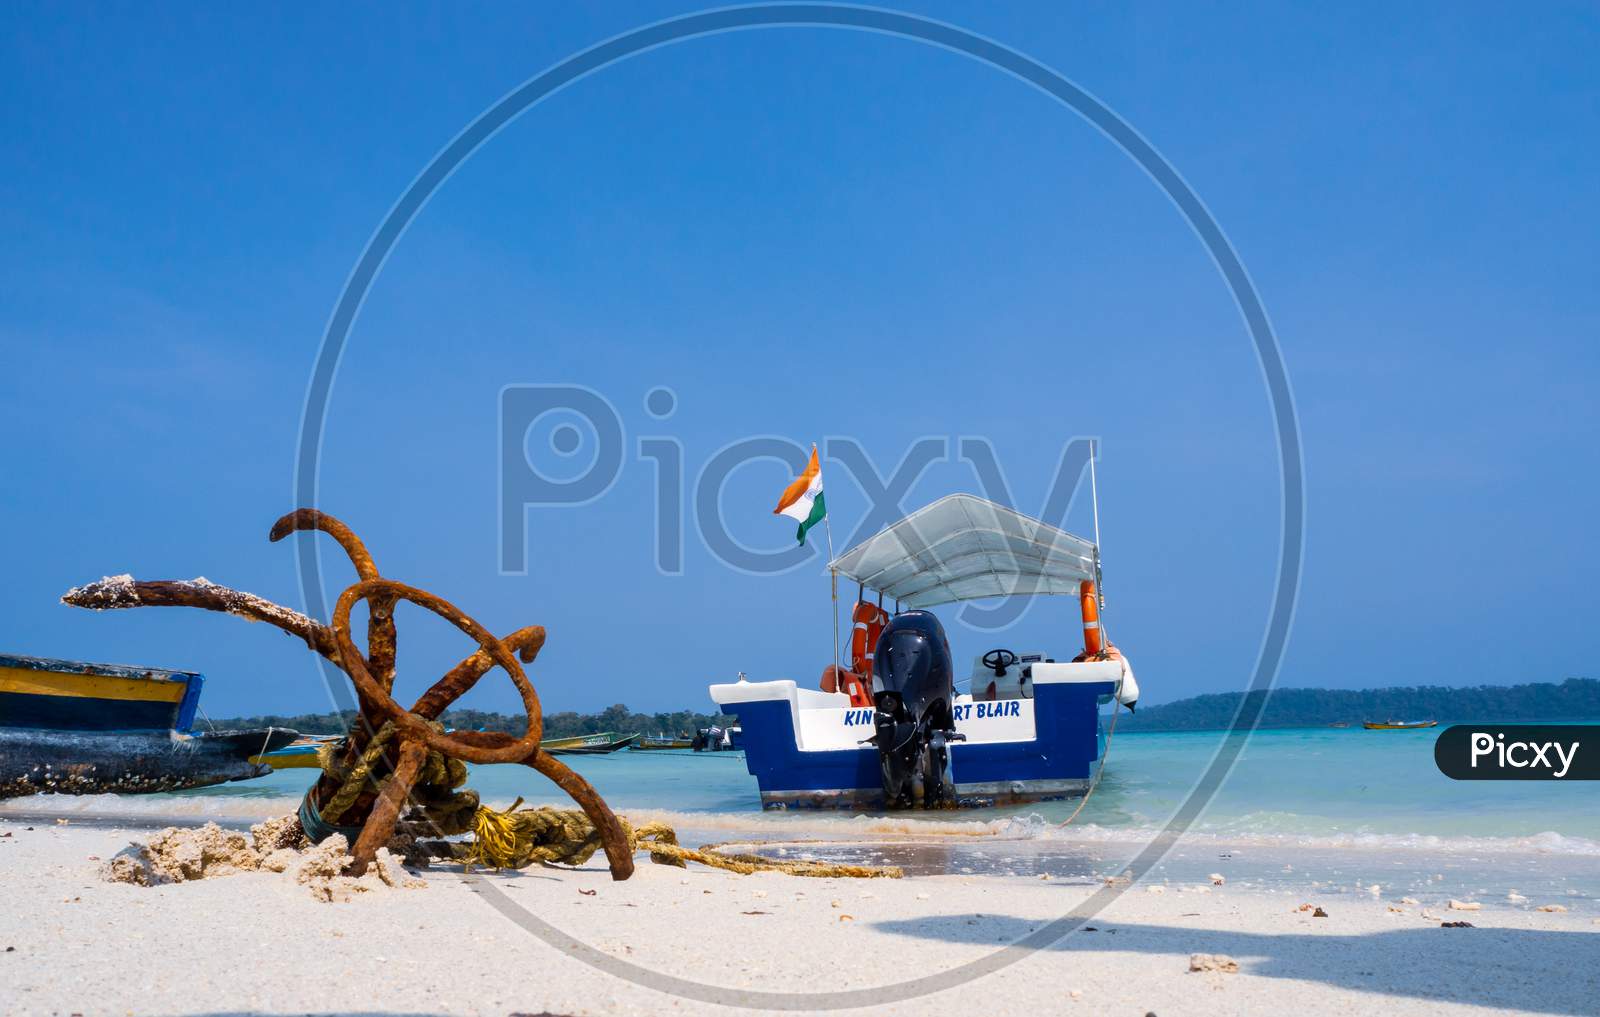 A speedboat at the Vijaynagar beach, Havelock Island, Andamans, India